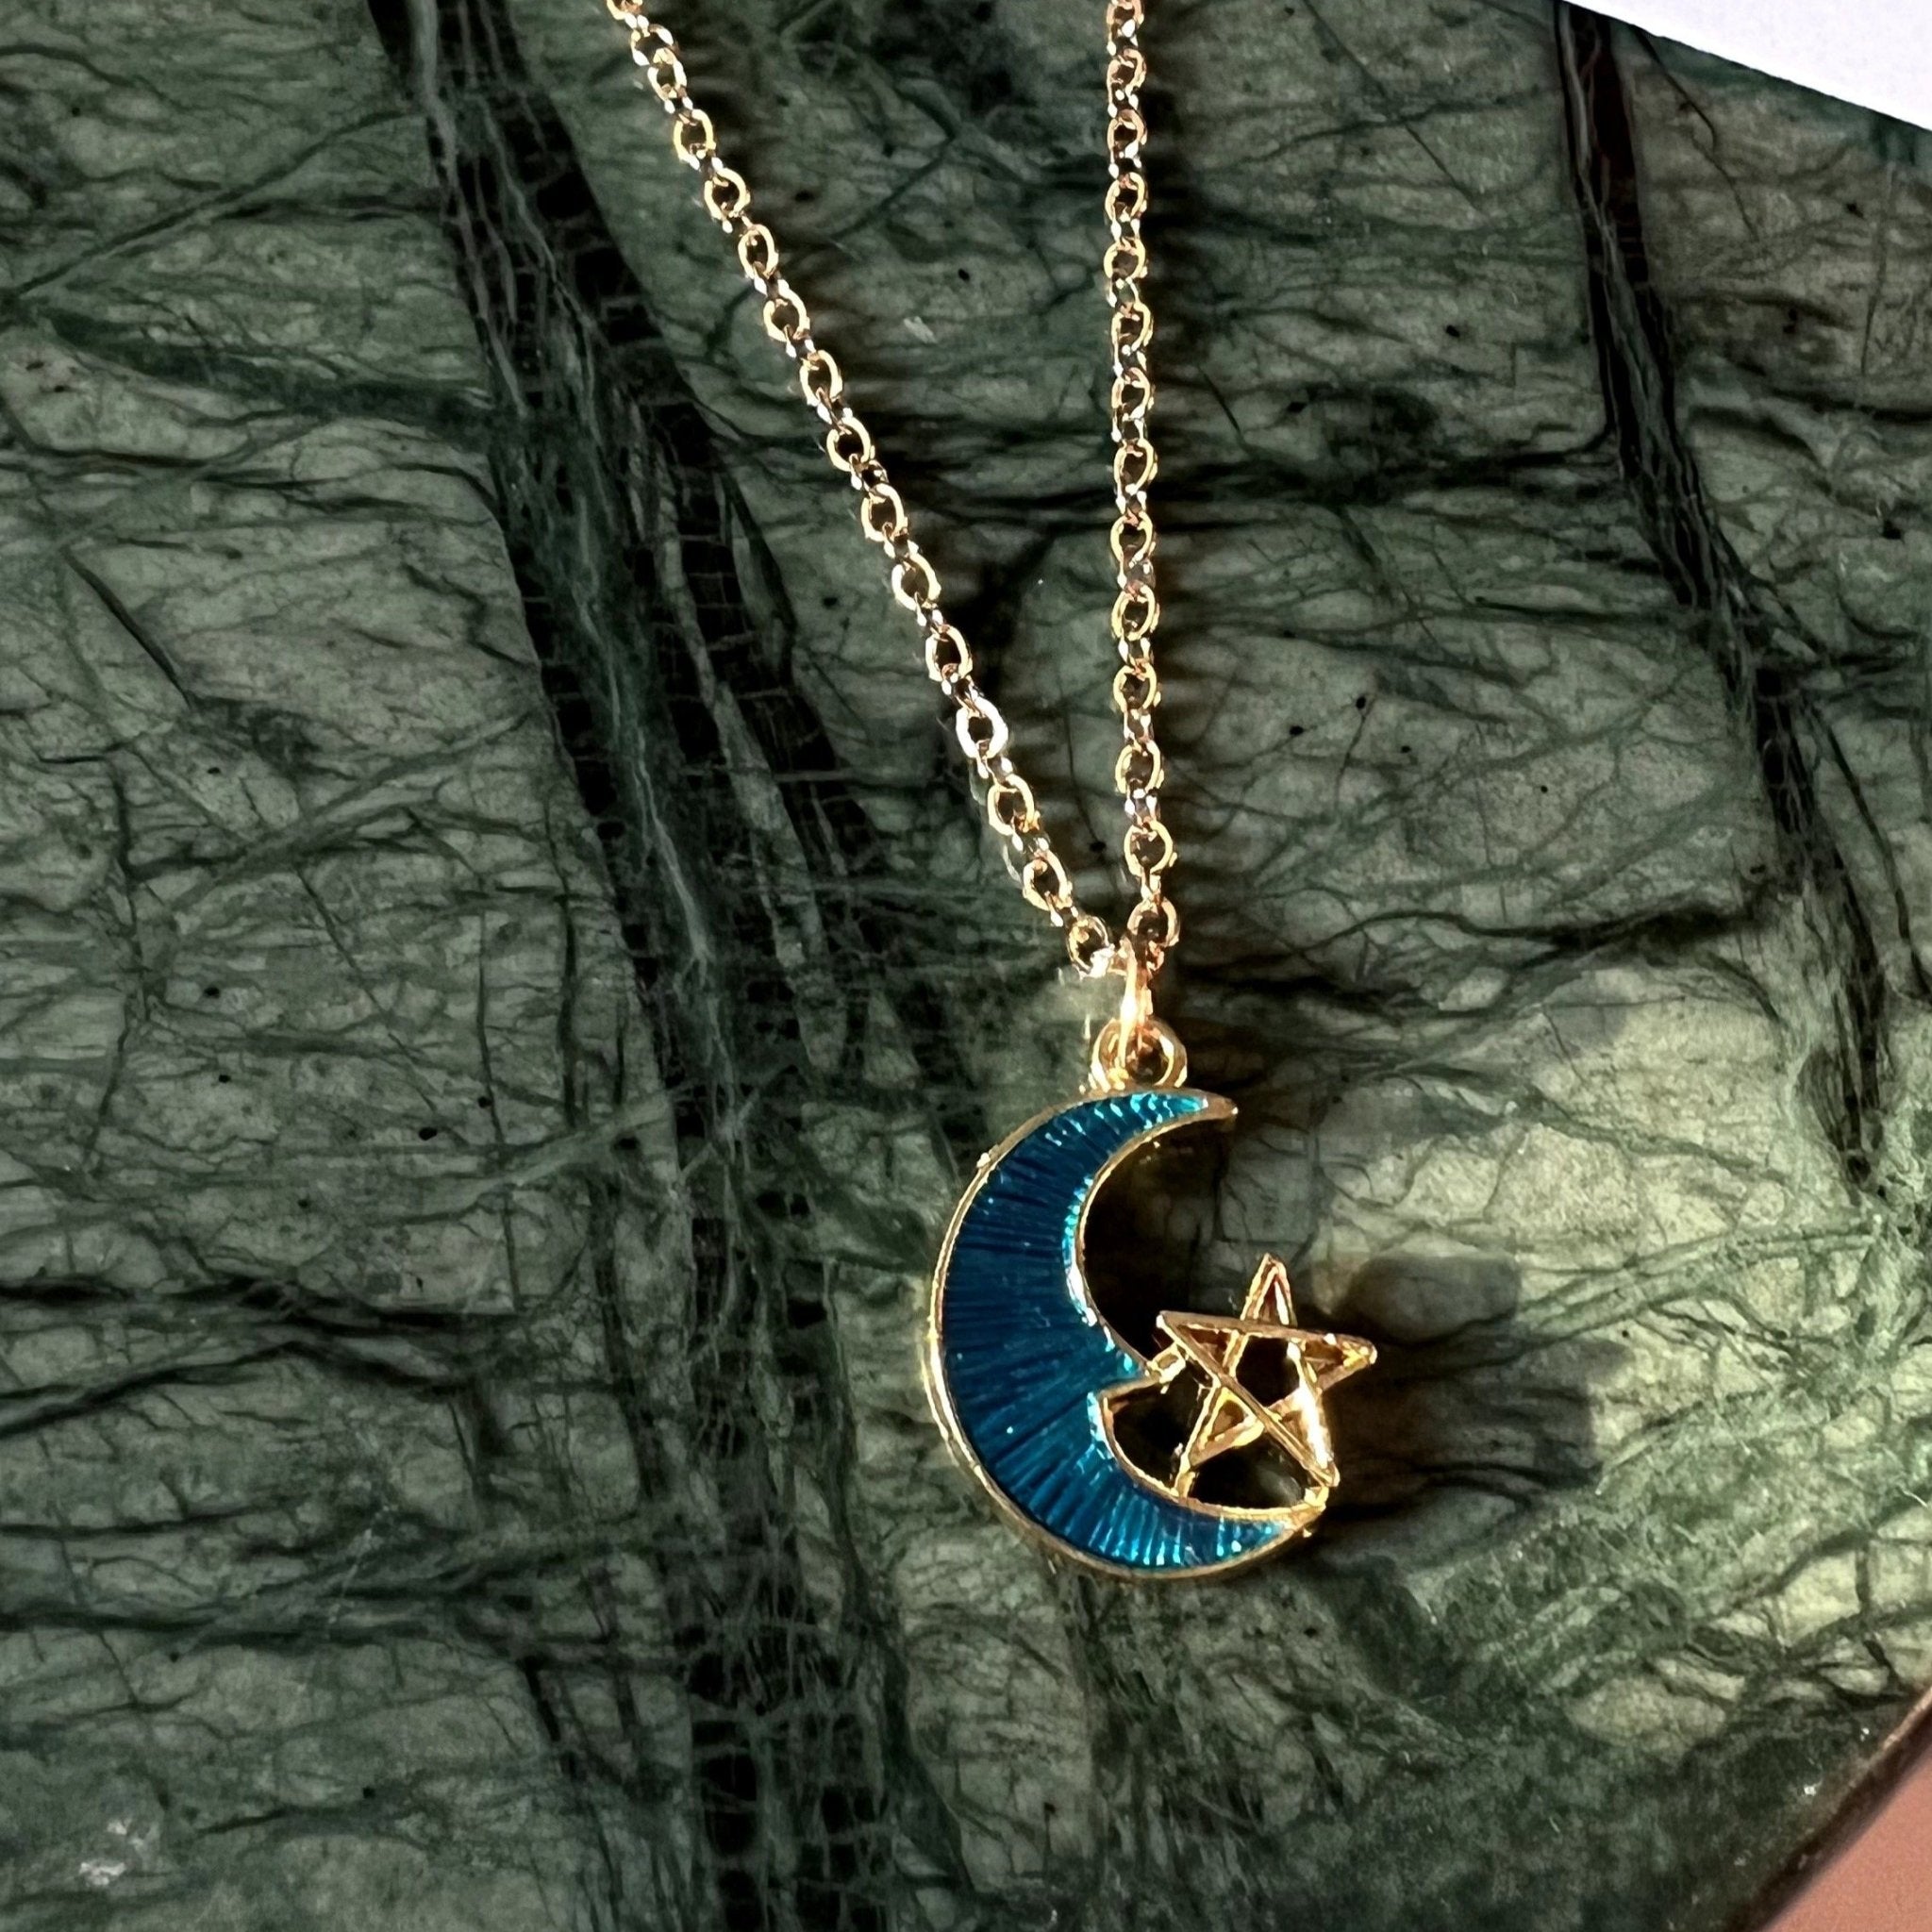 Arizona Turquoise and Inlaid Jewelry Moon and Star Pendant 2411165 - Sami  Fine Jewelry